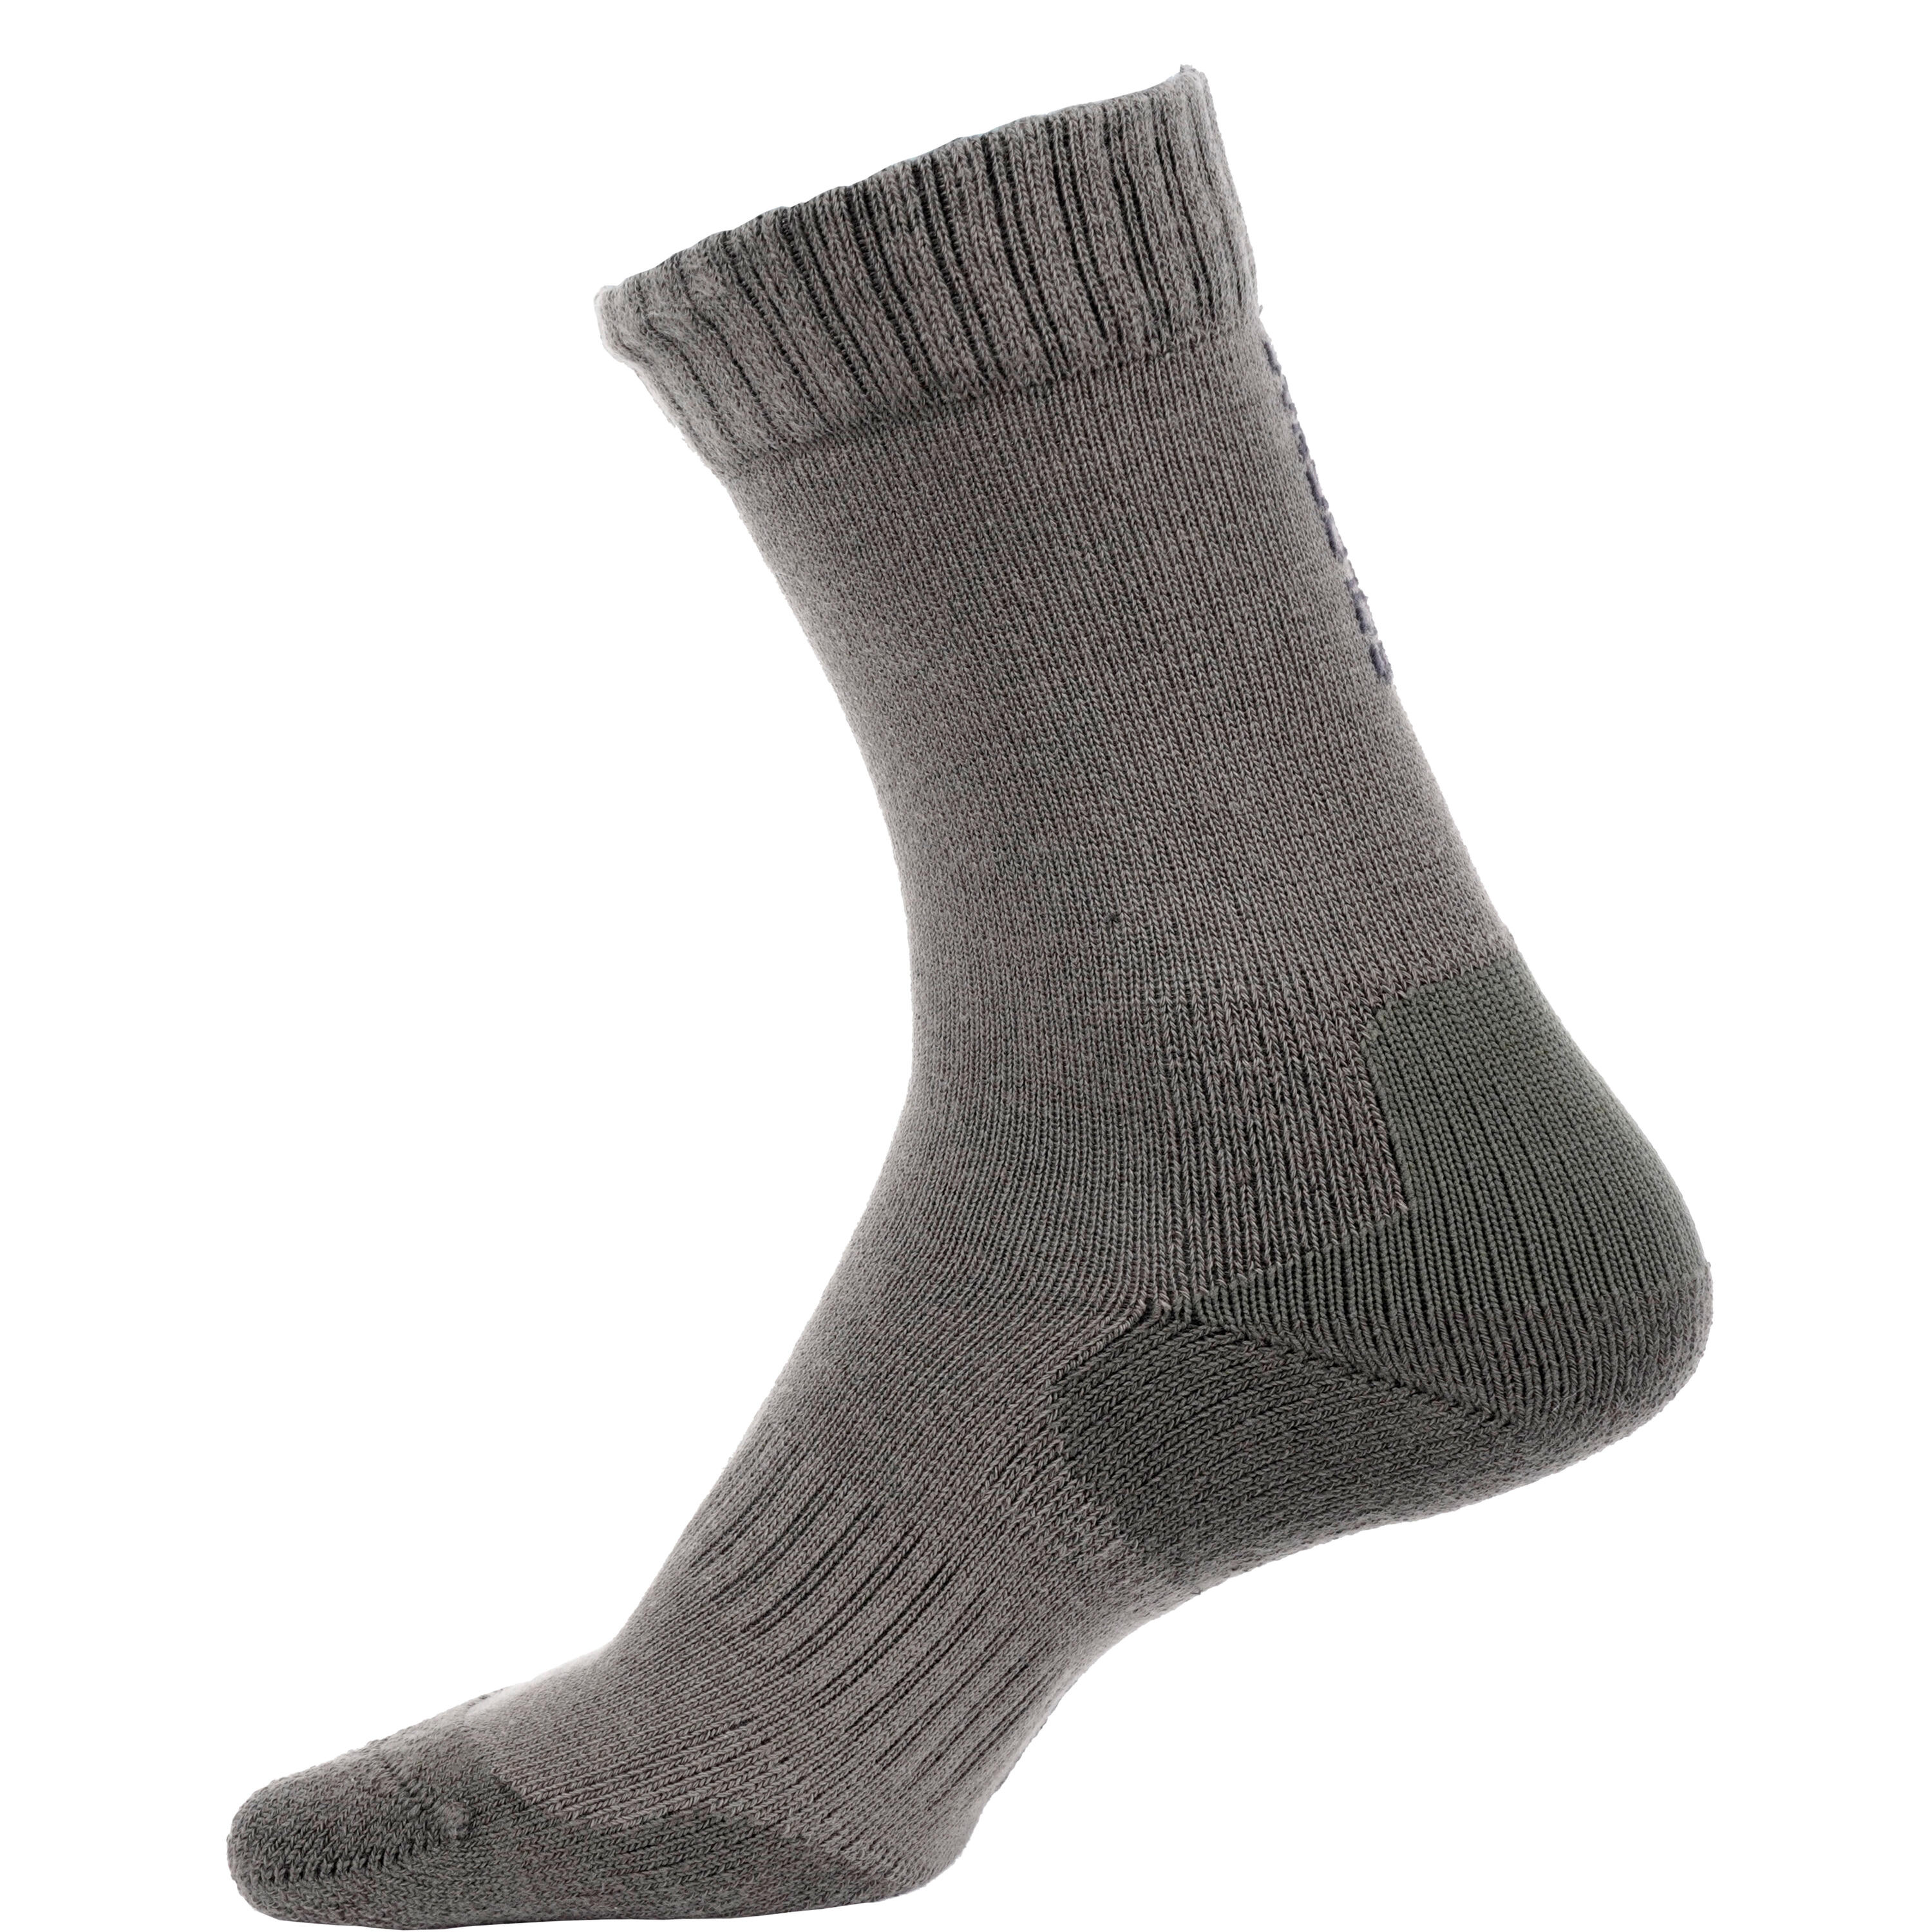 Hunting Socks Pack ACT 100 x2 pairs 4/5